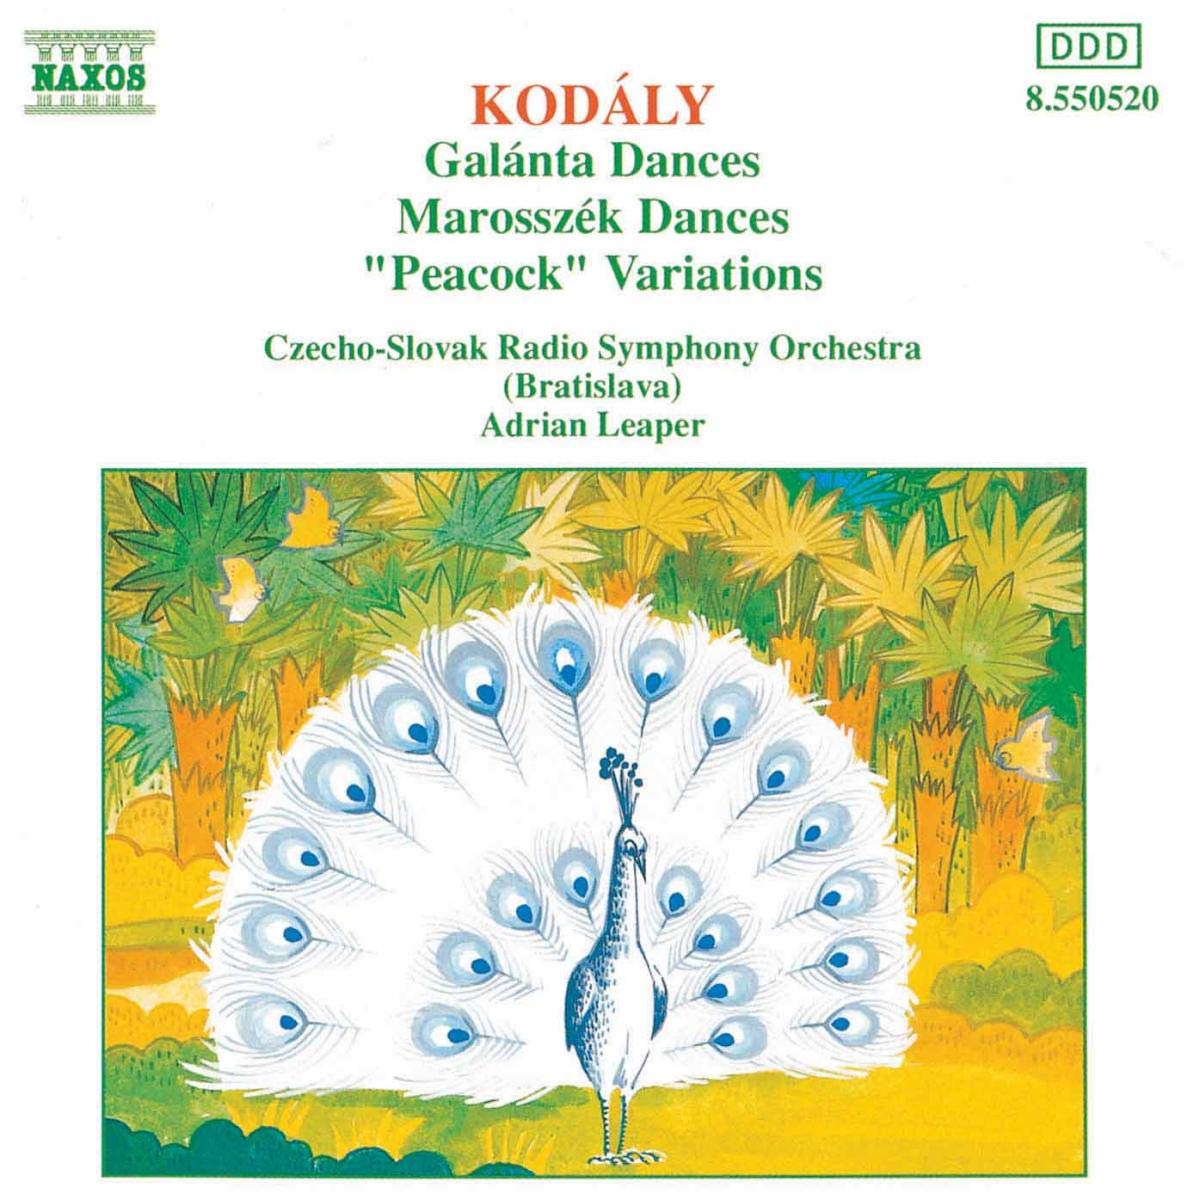 KODALY: Galanta Dances / Marosszek Dances / The Peacock